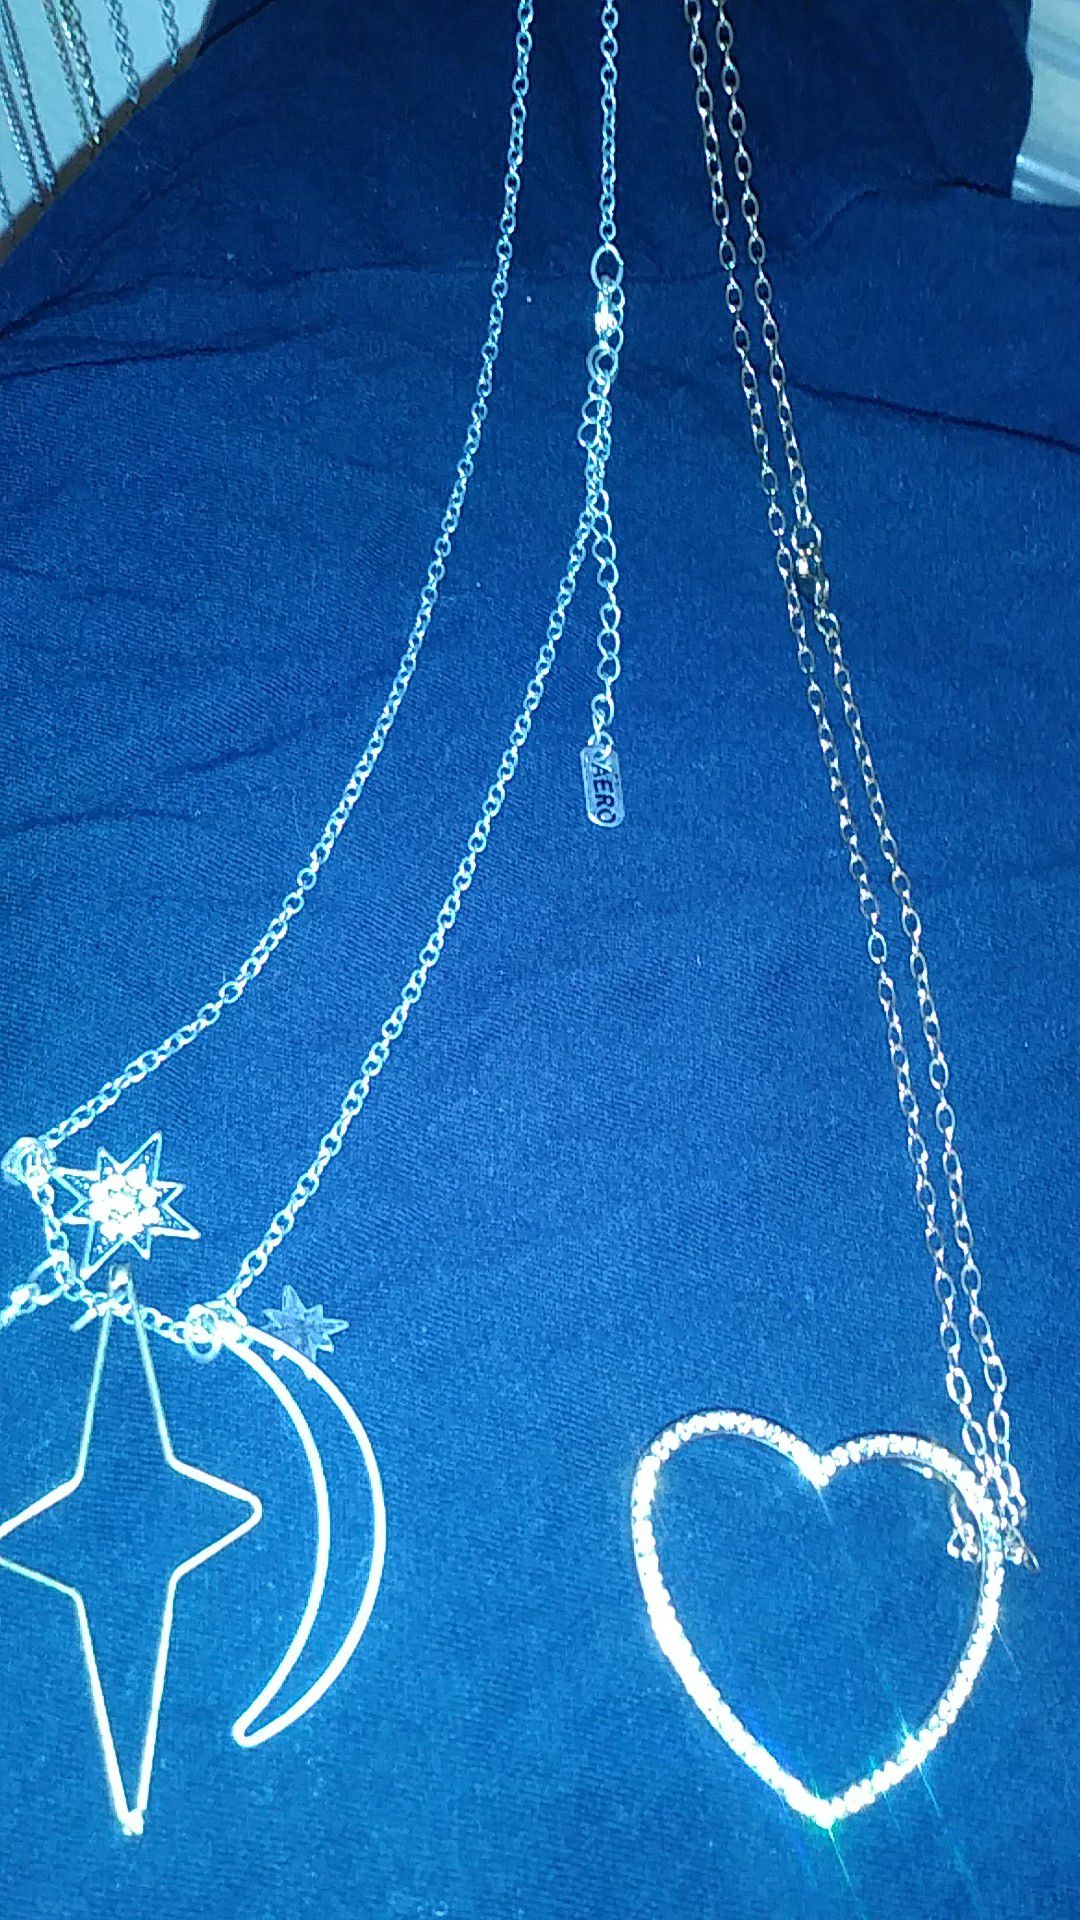 Long chain necklace 1golden 1 silver color